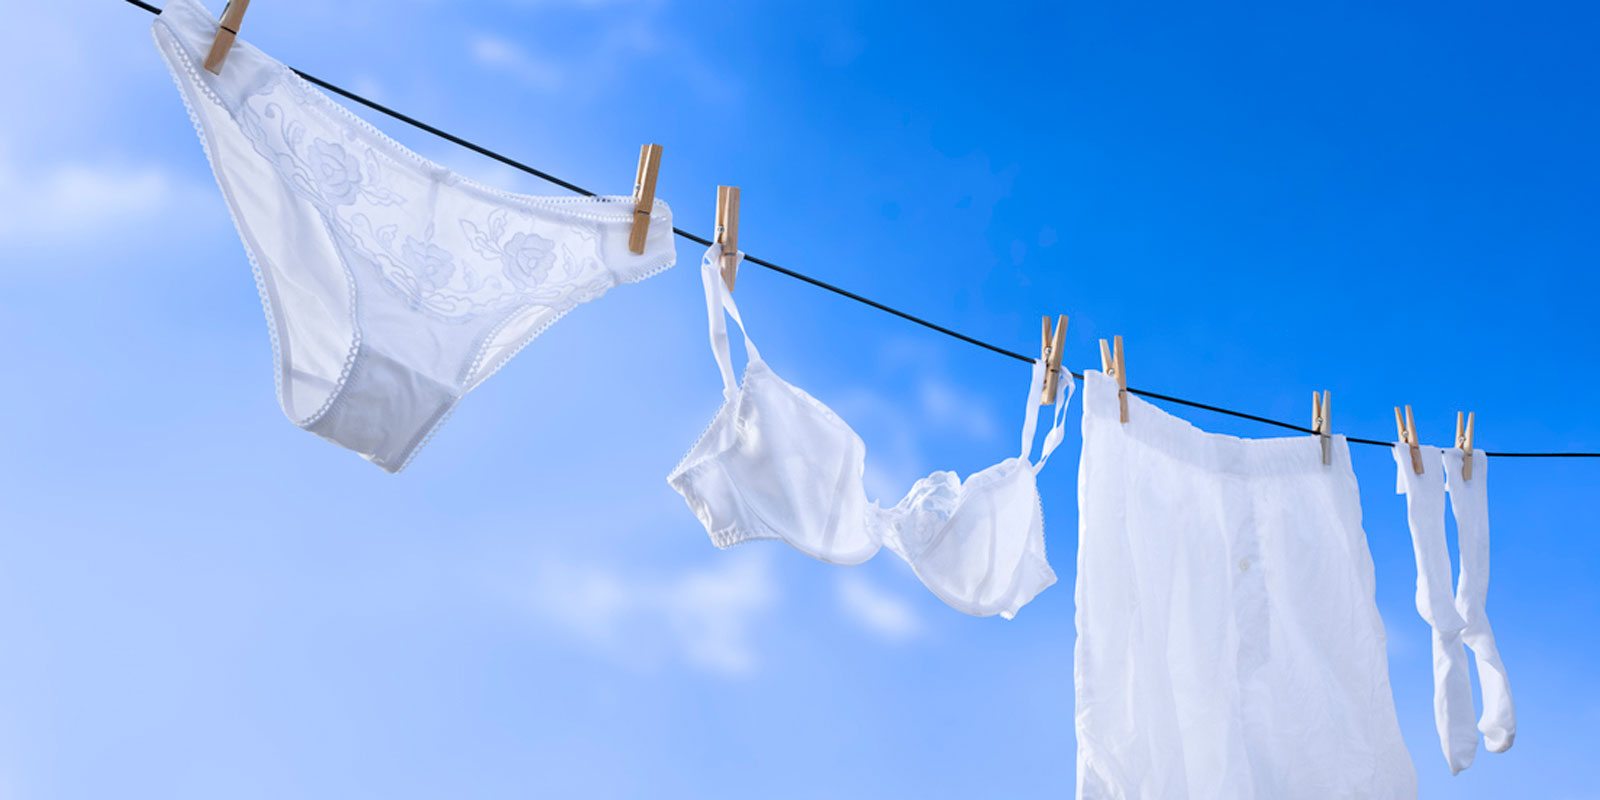 Probably the world's most tech-advanced organic cotton underwear